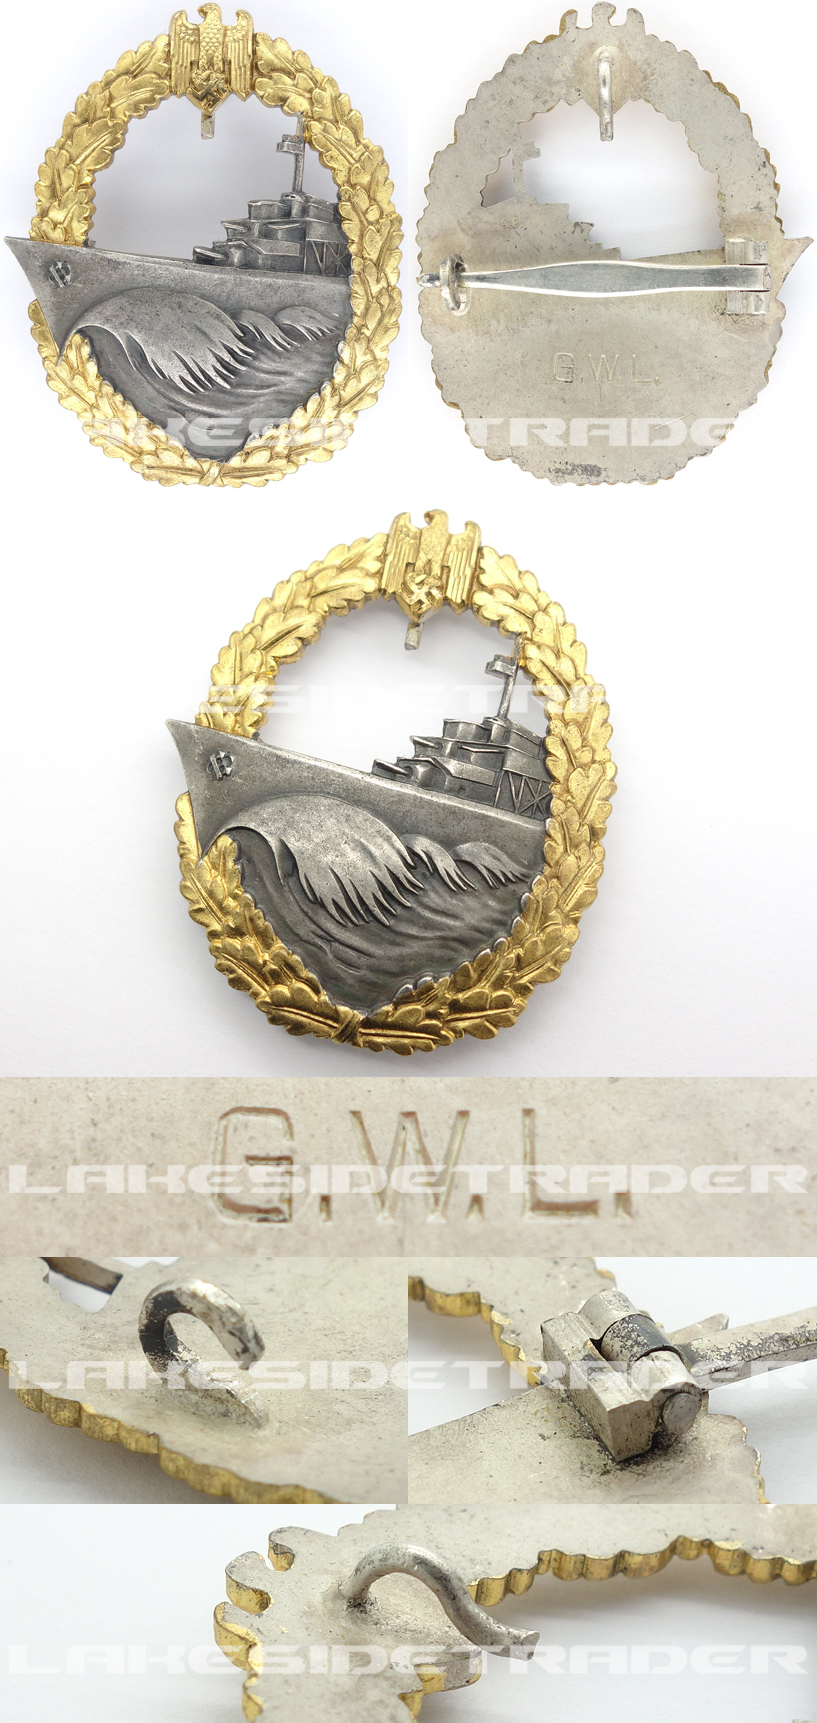 Mint - Navy Destroyer Badge by GWL